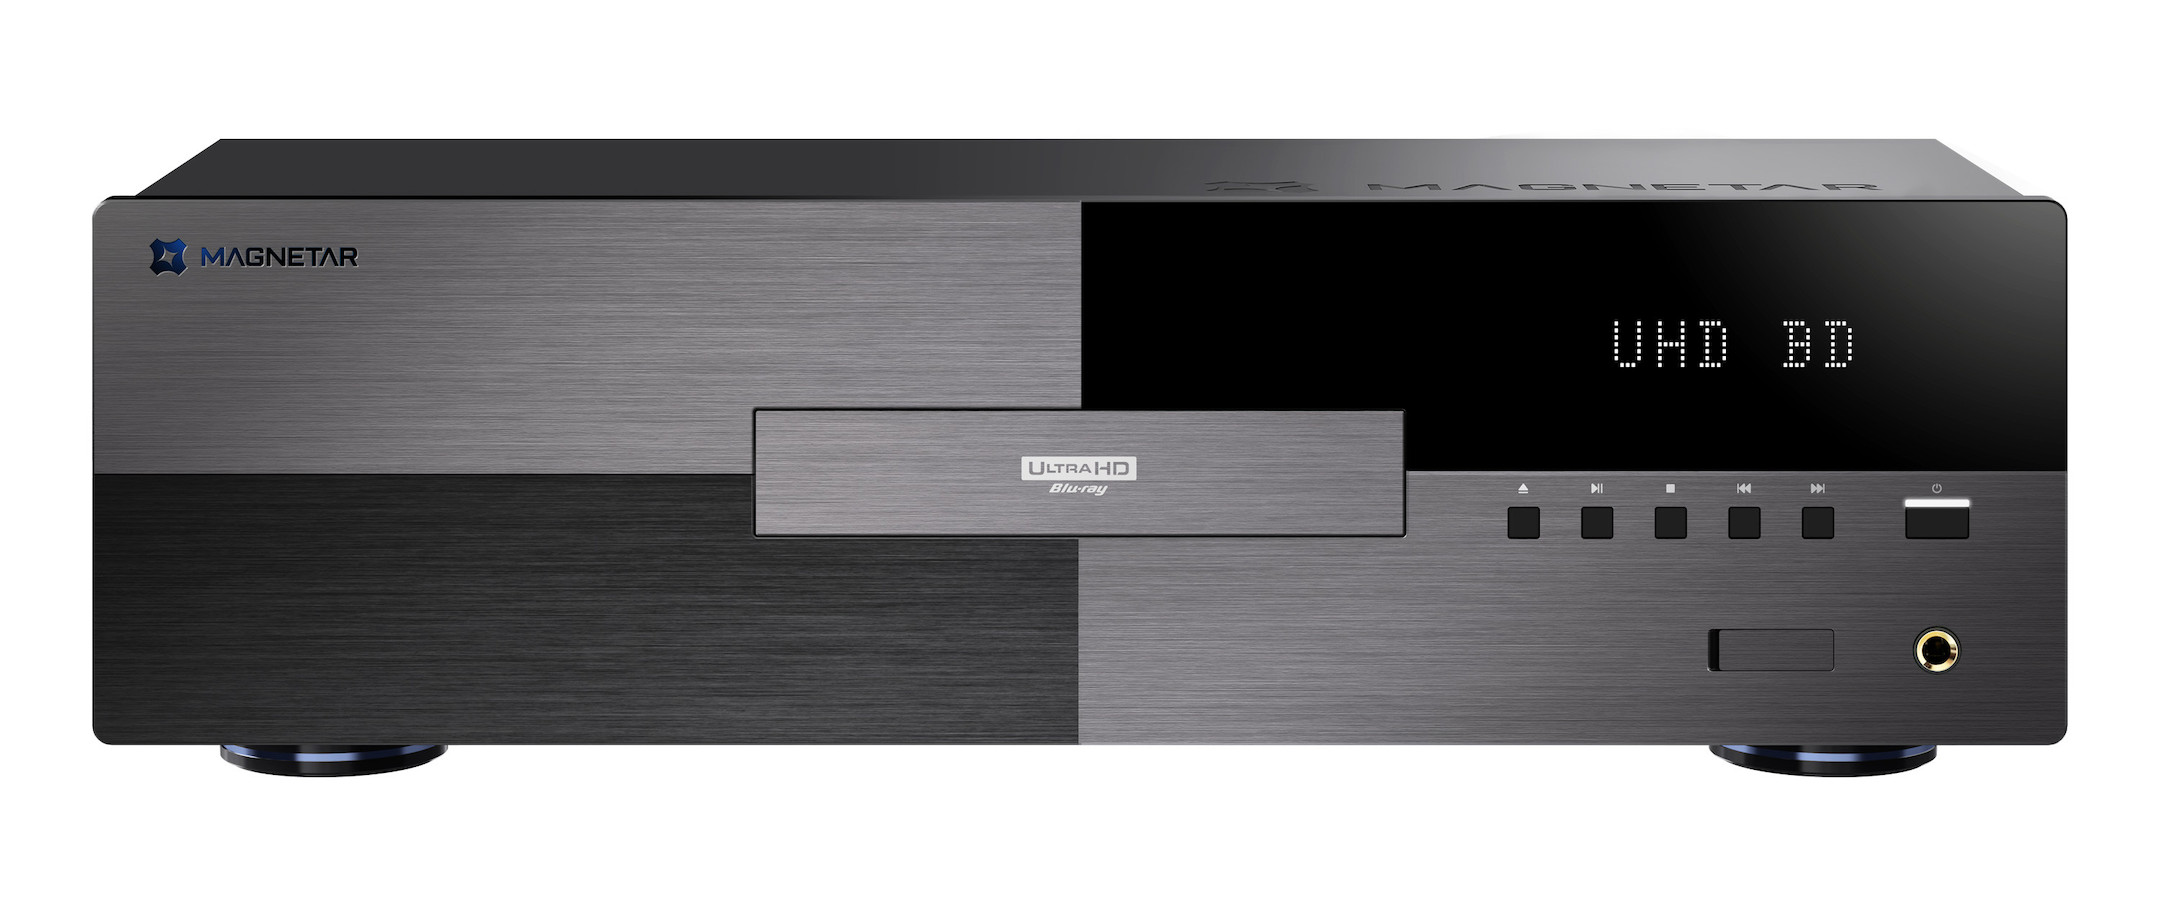 Magnetar-Audio-UDP900-UHD-Reference-Blu-ray-Player